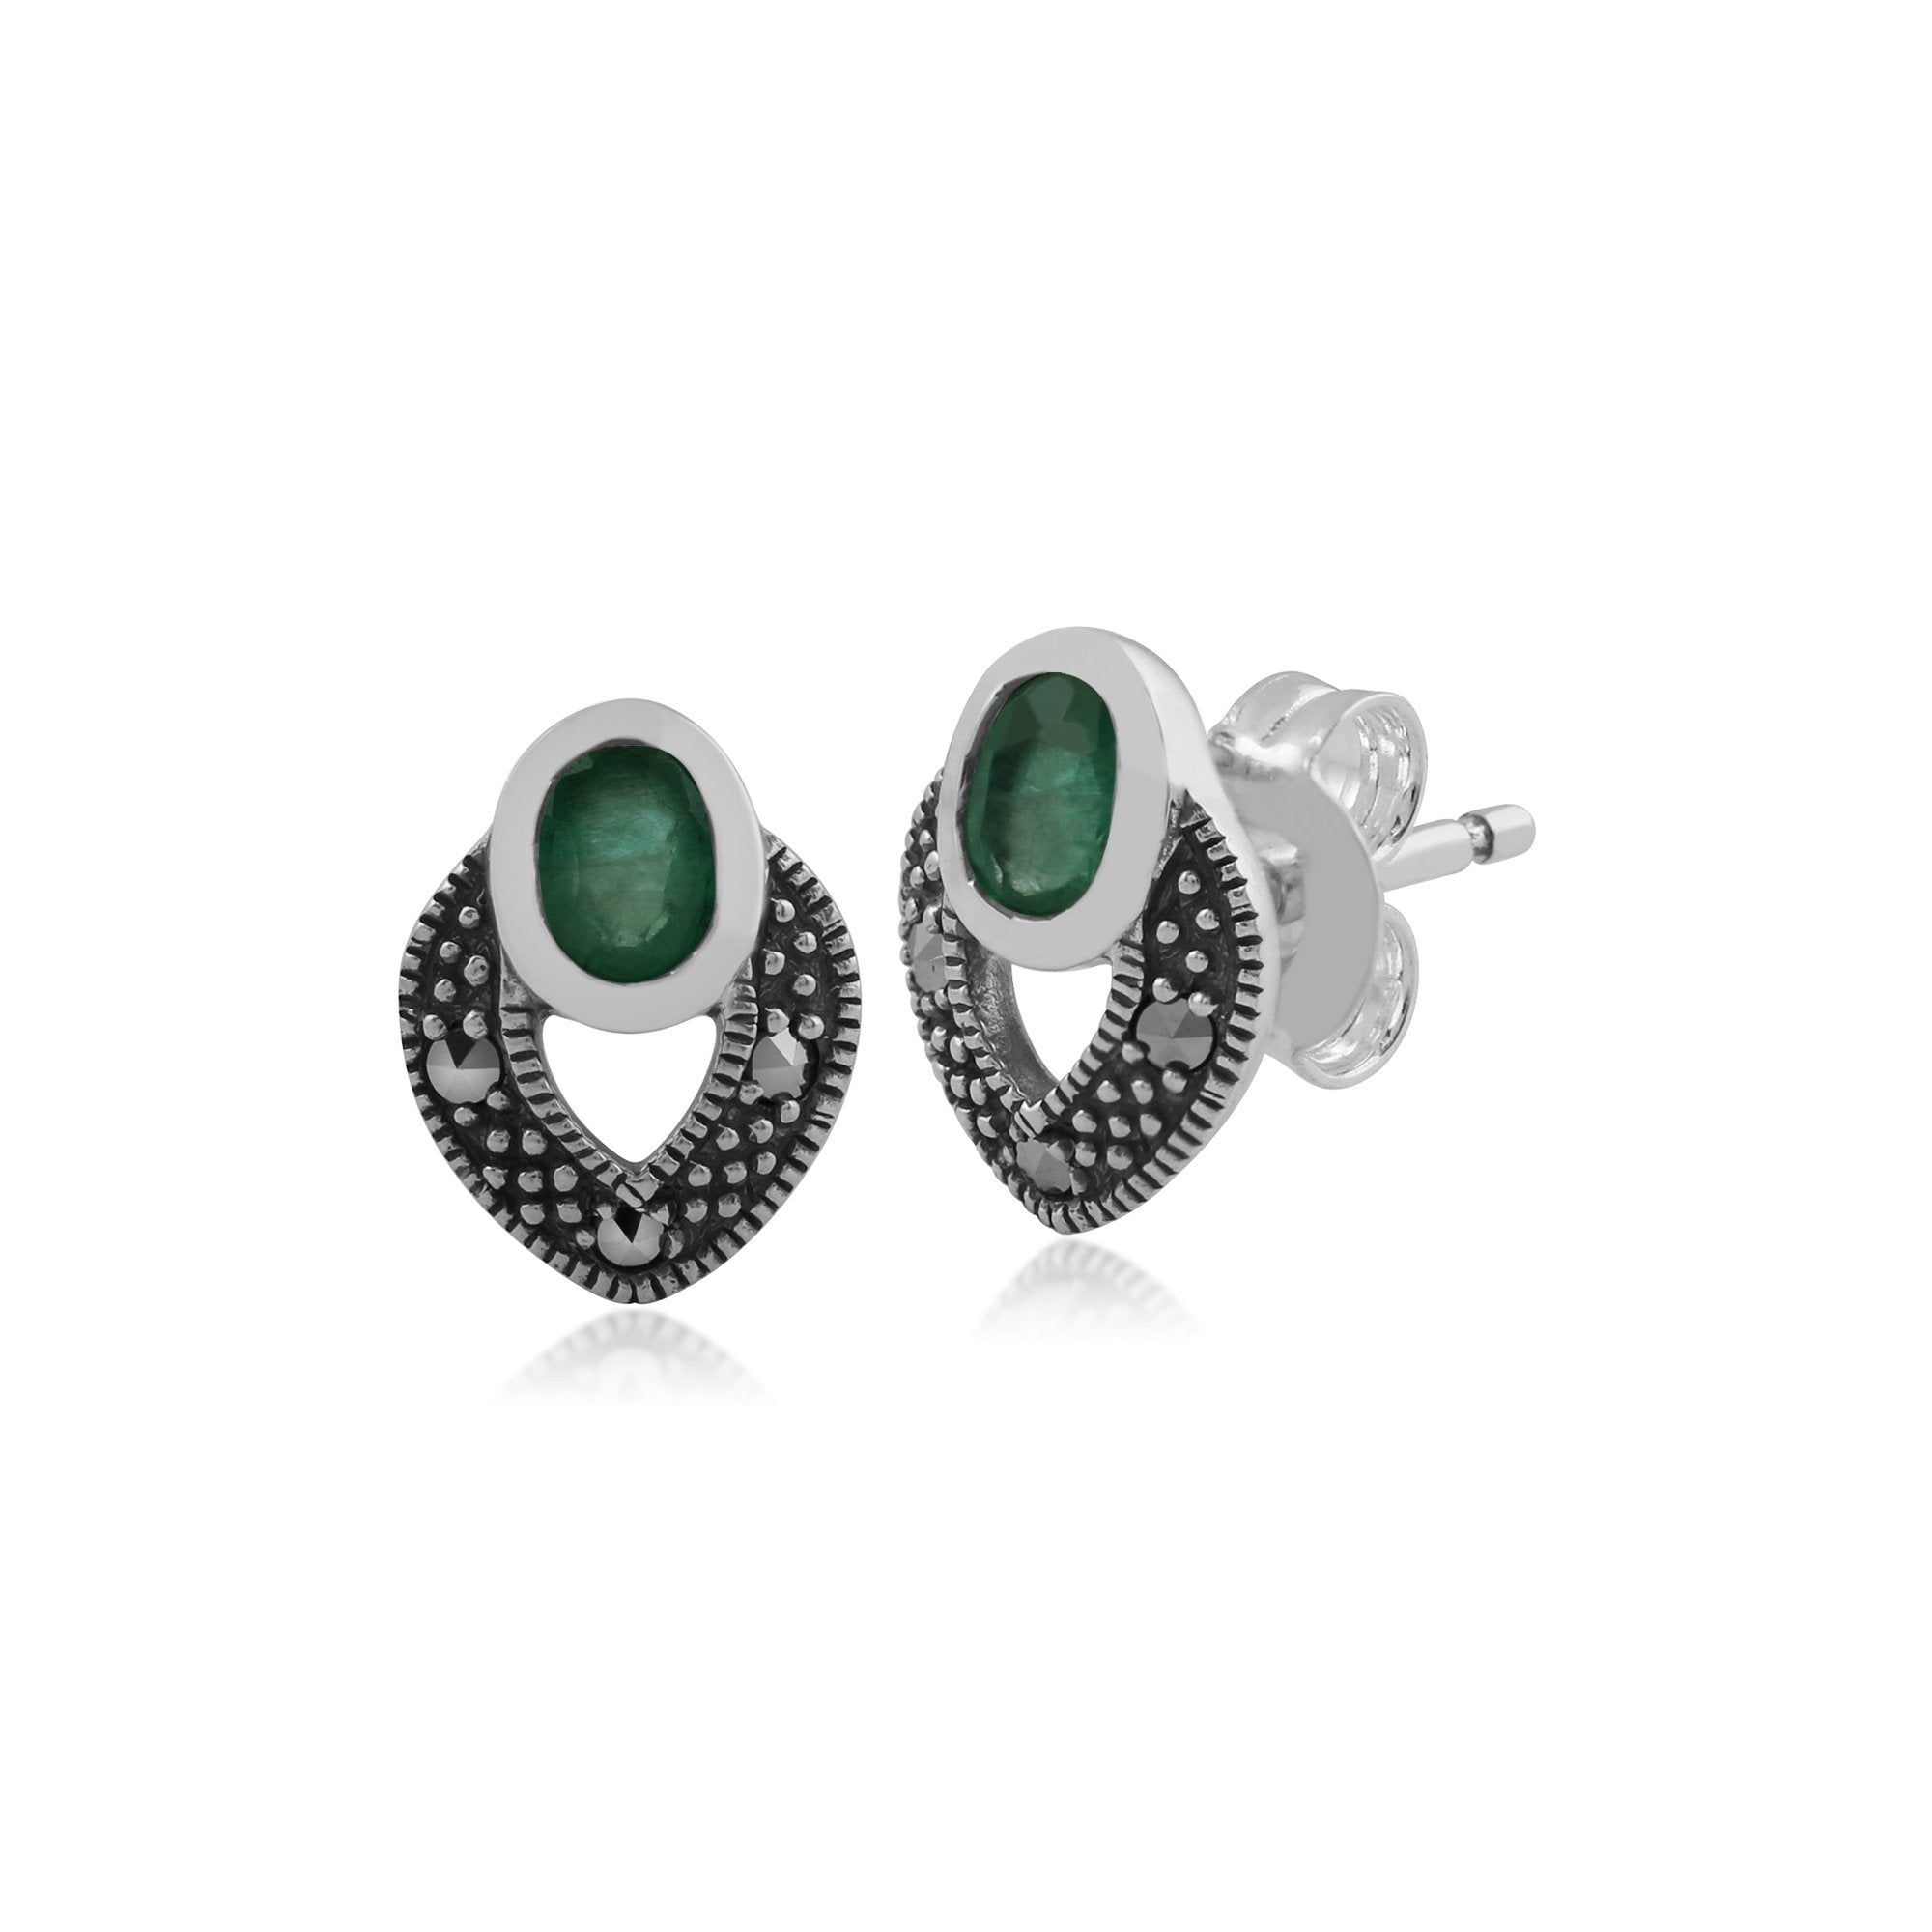 Art Deco Style Oval Emerald & Marcasite Stud Earrings & Pendant Set in 925 Sterling Silver